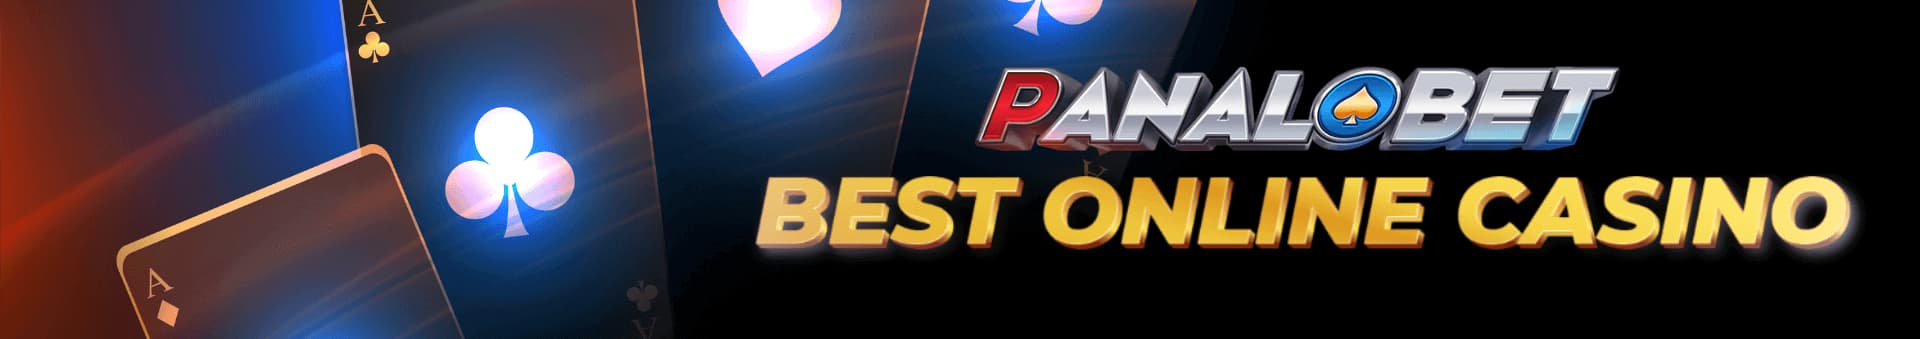 PANALOBET online casino, Online slot, Sports, Live Casino